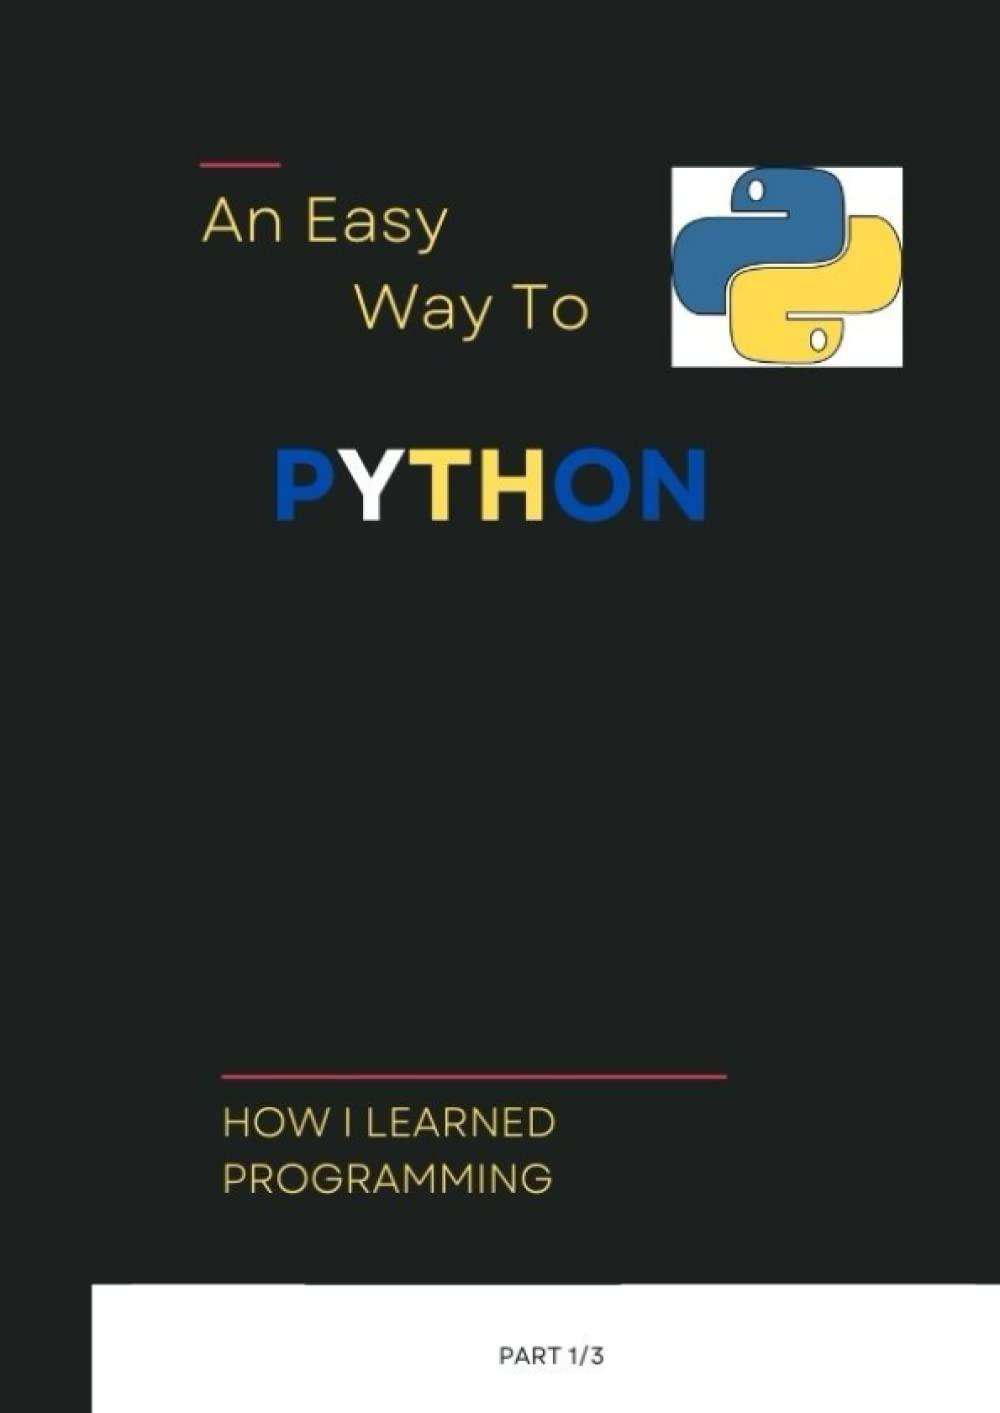 an easy way to python 1st edition vishal yadav b0b4splqkl, 979-8838192189